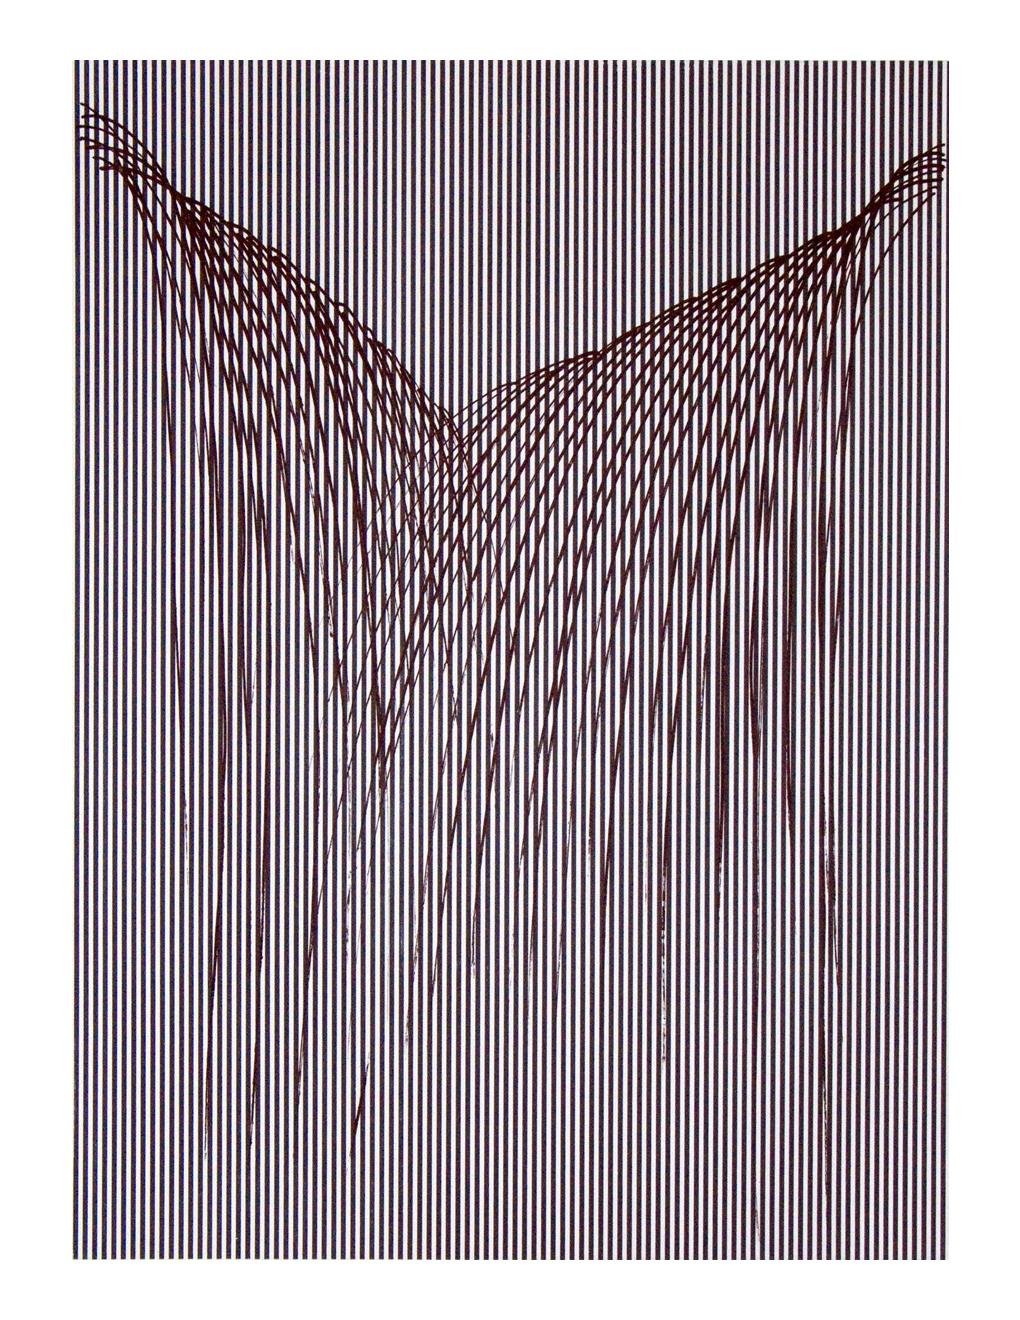 Tom Orr Abstract Print – Wasserfall III